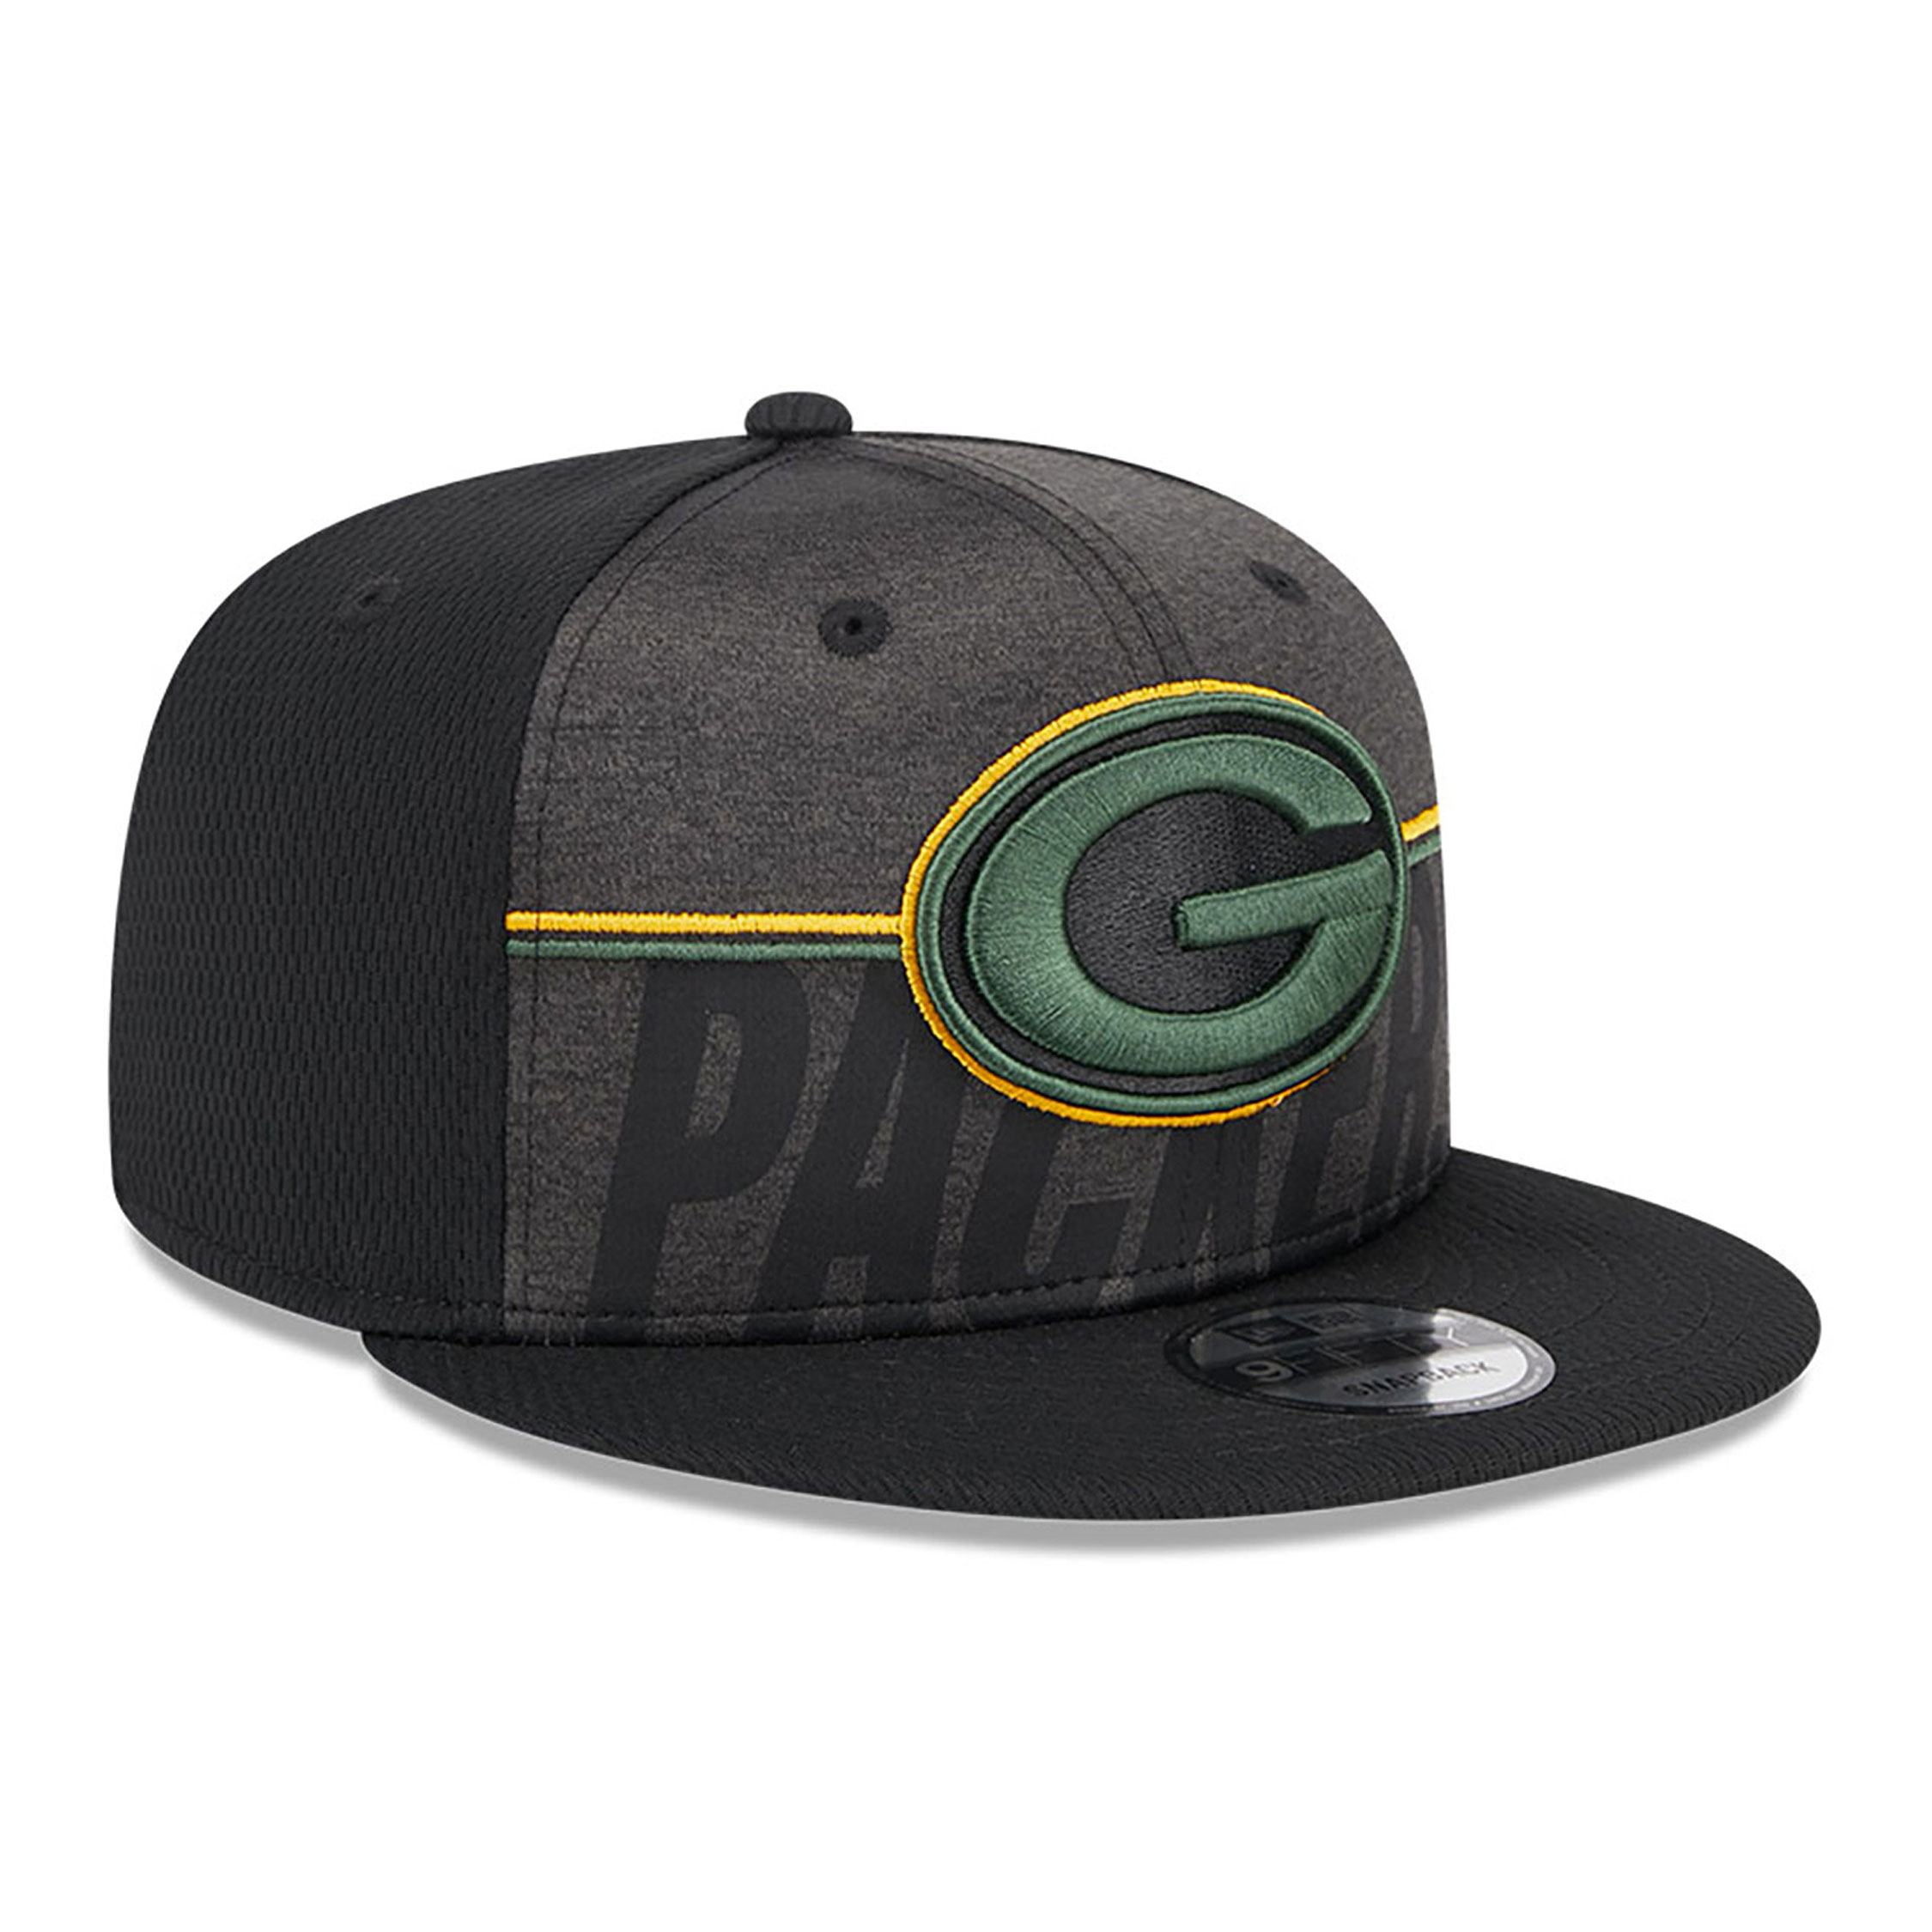 New Era 9Fifty Snapback Cap - Training Green Bay Packers Black